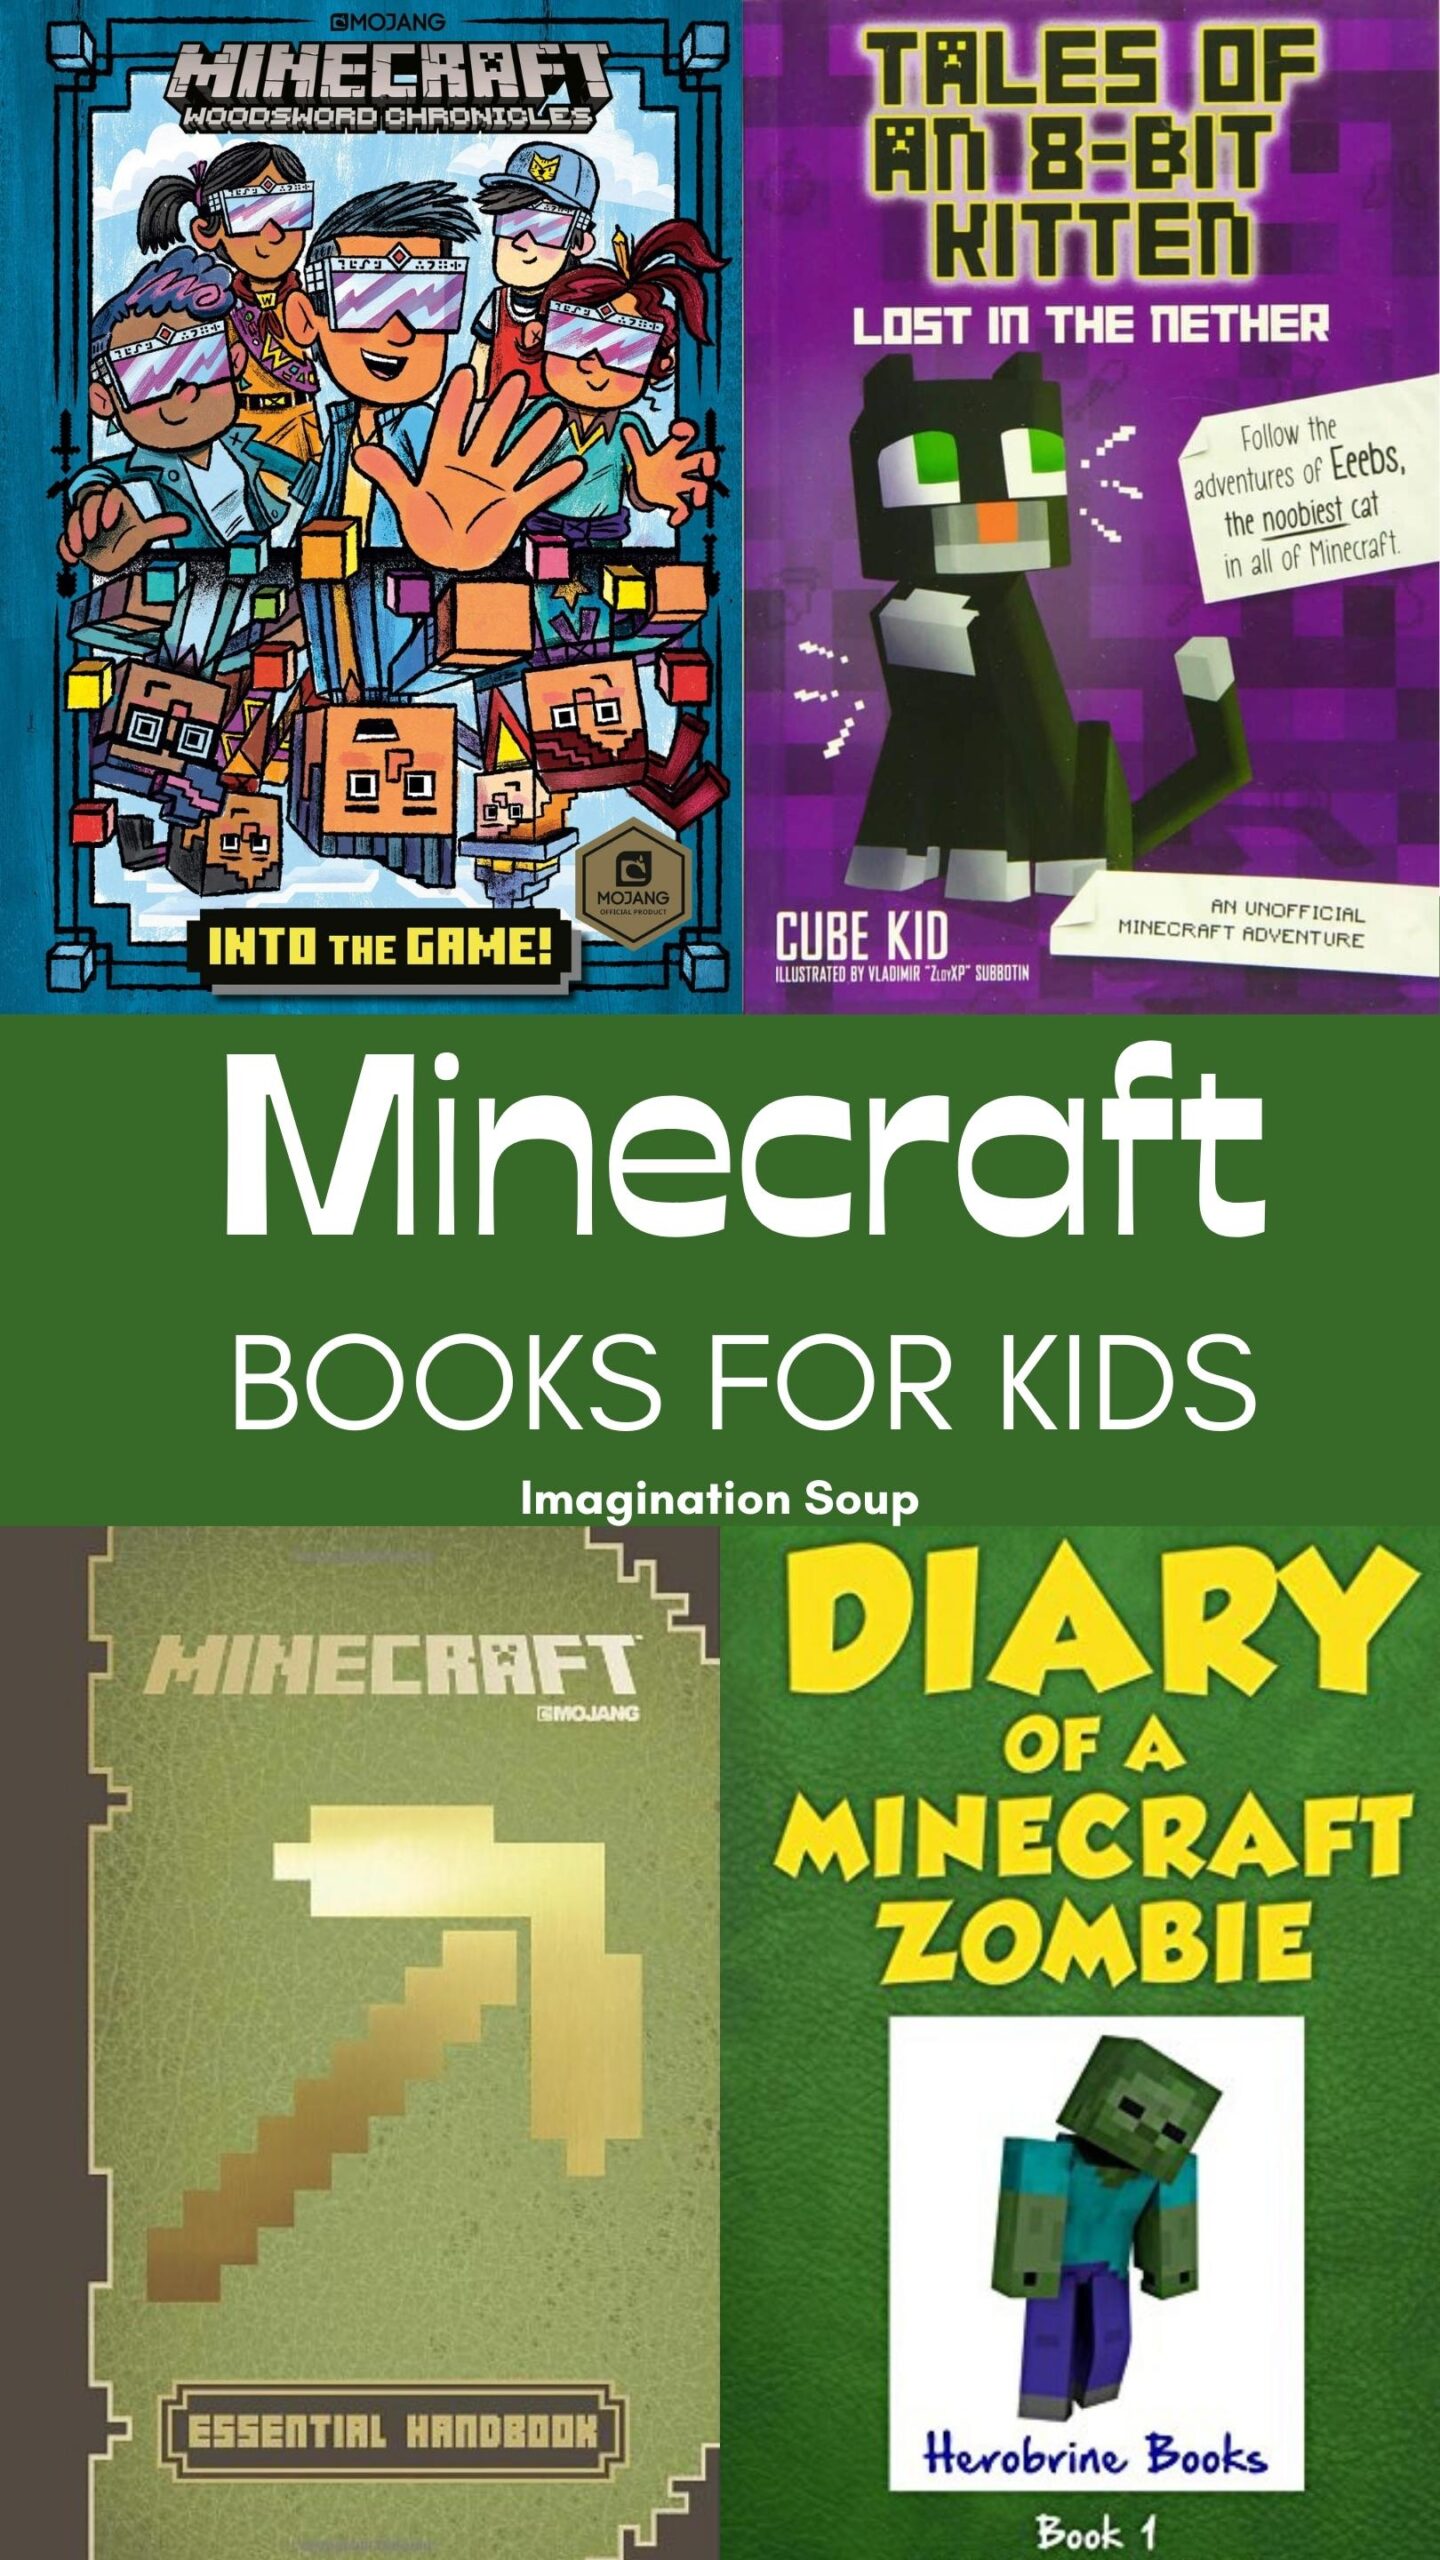 Minecraft books for kids